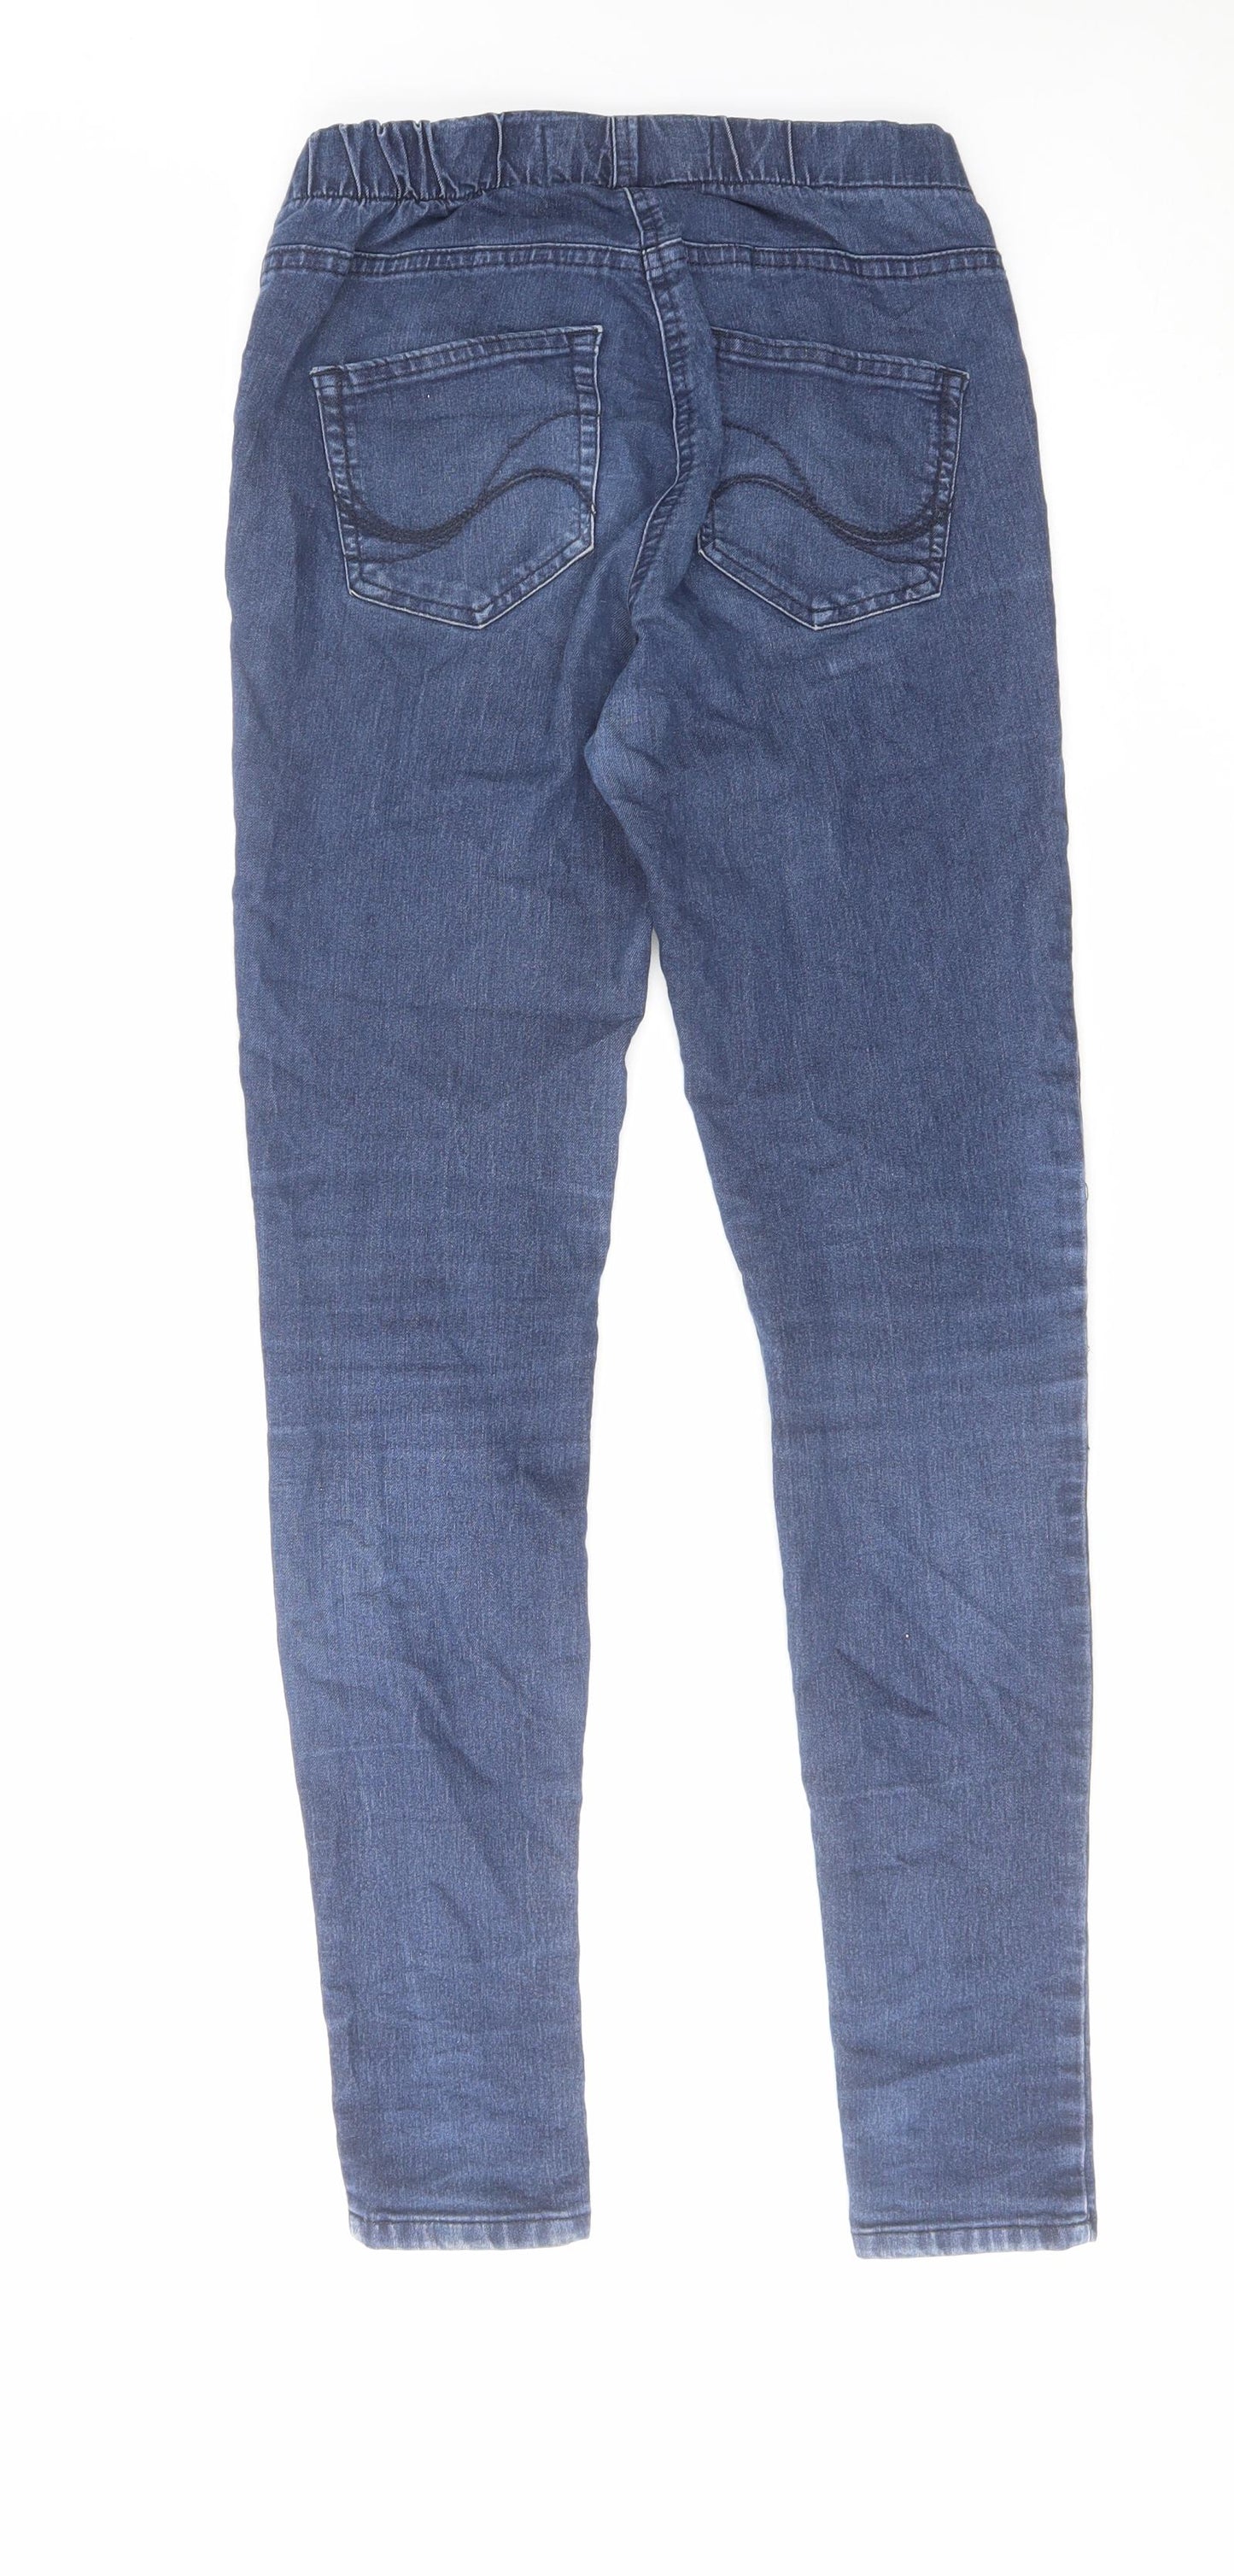 TU Womens Blue Cotton Jegging Jeans Size 10 L30 in Regular